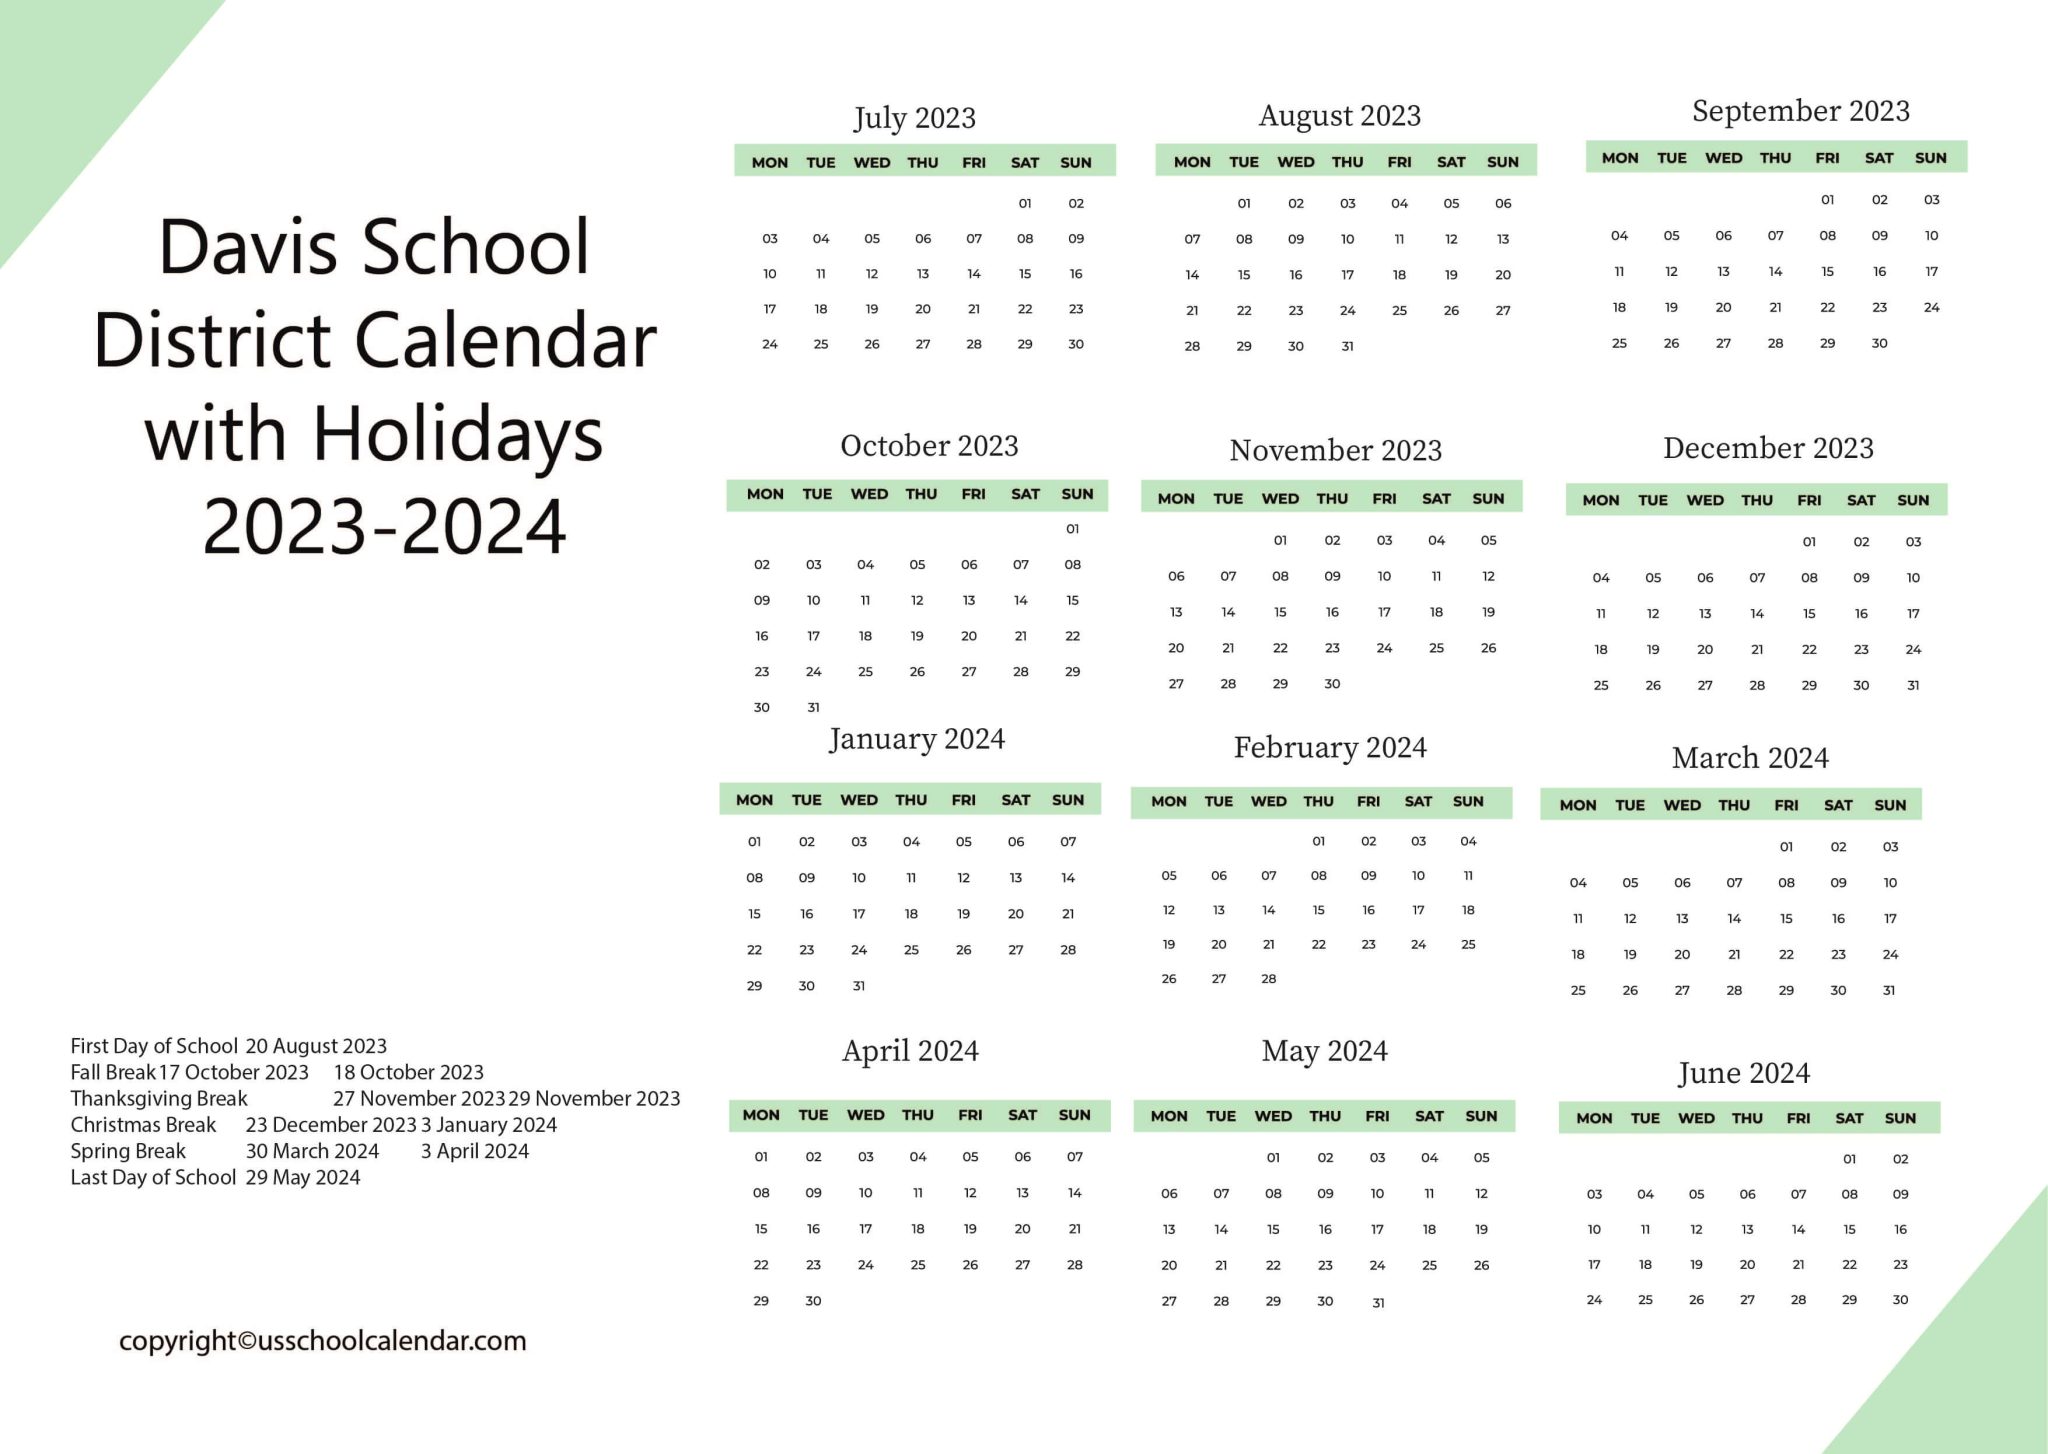 davis-school-district-calendar-with-holidays-2023-2024